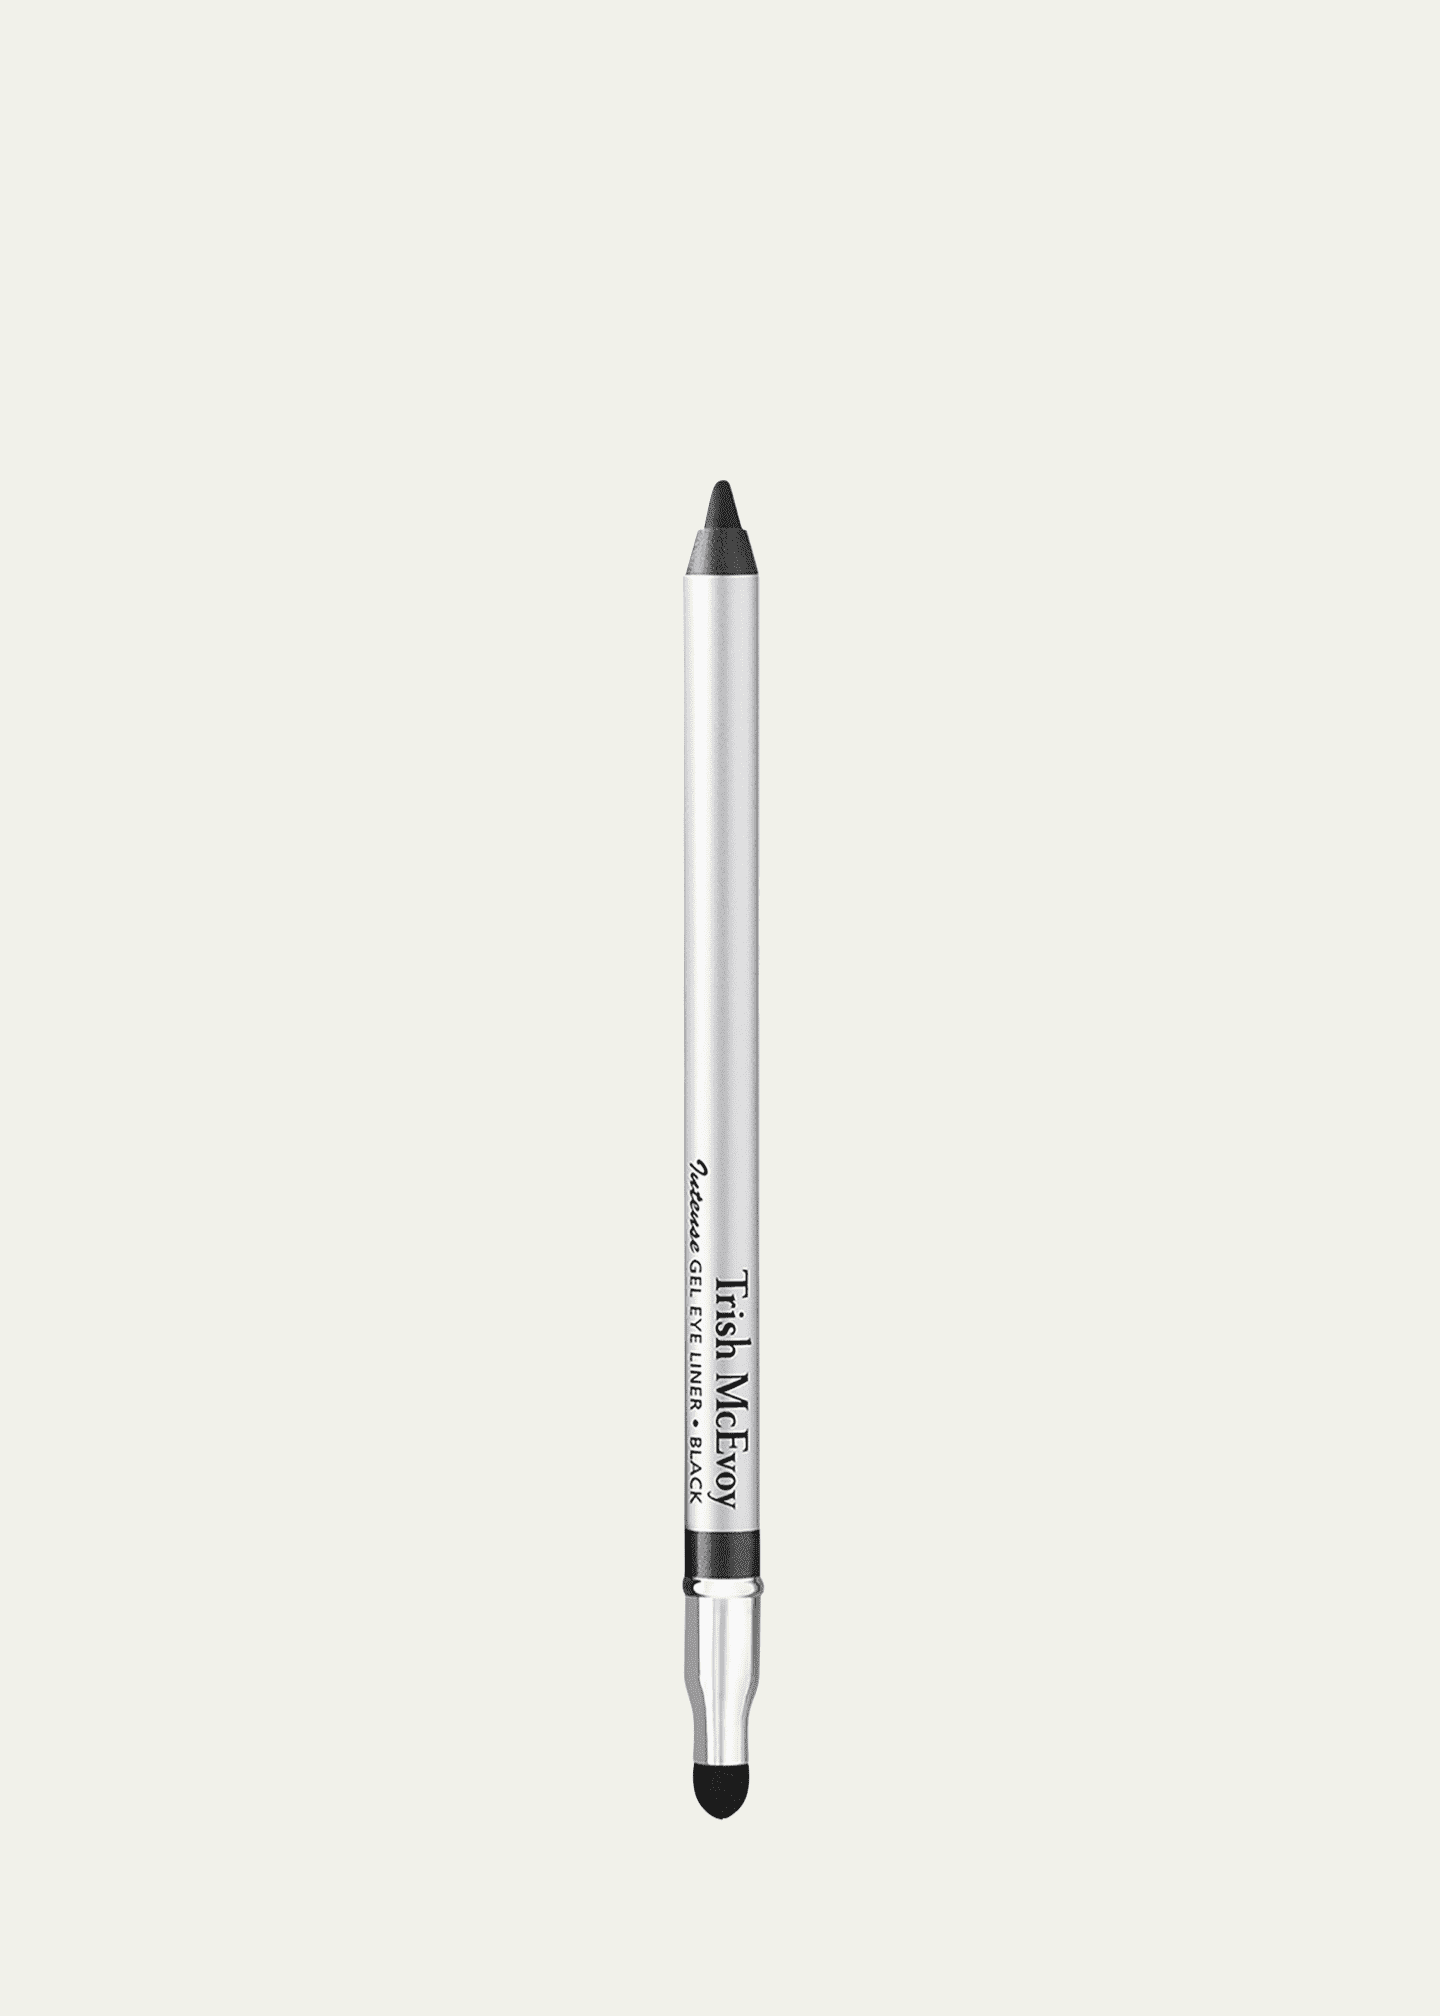 Trish McEvoy Intense Gel Eyeliner Pencil Image 1 of 4